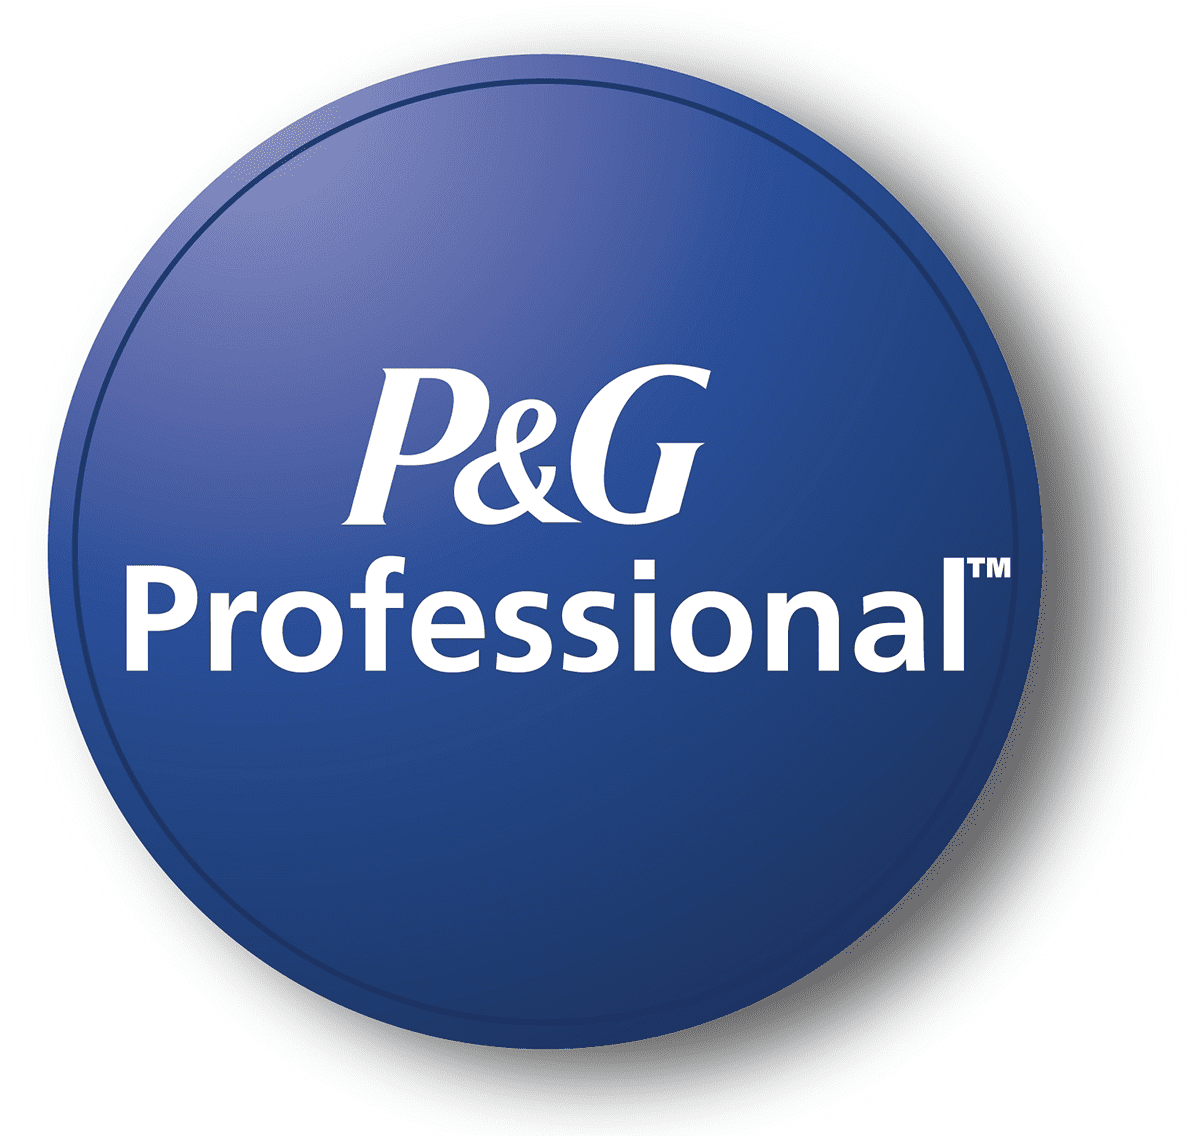 P&G Professional logo